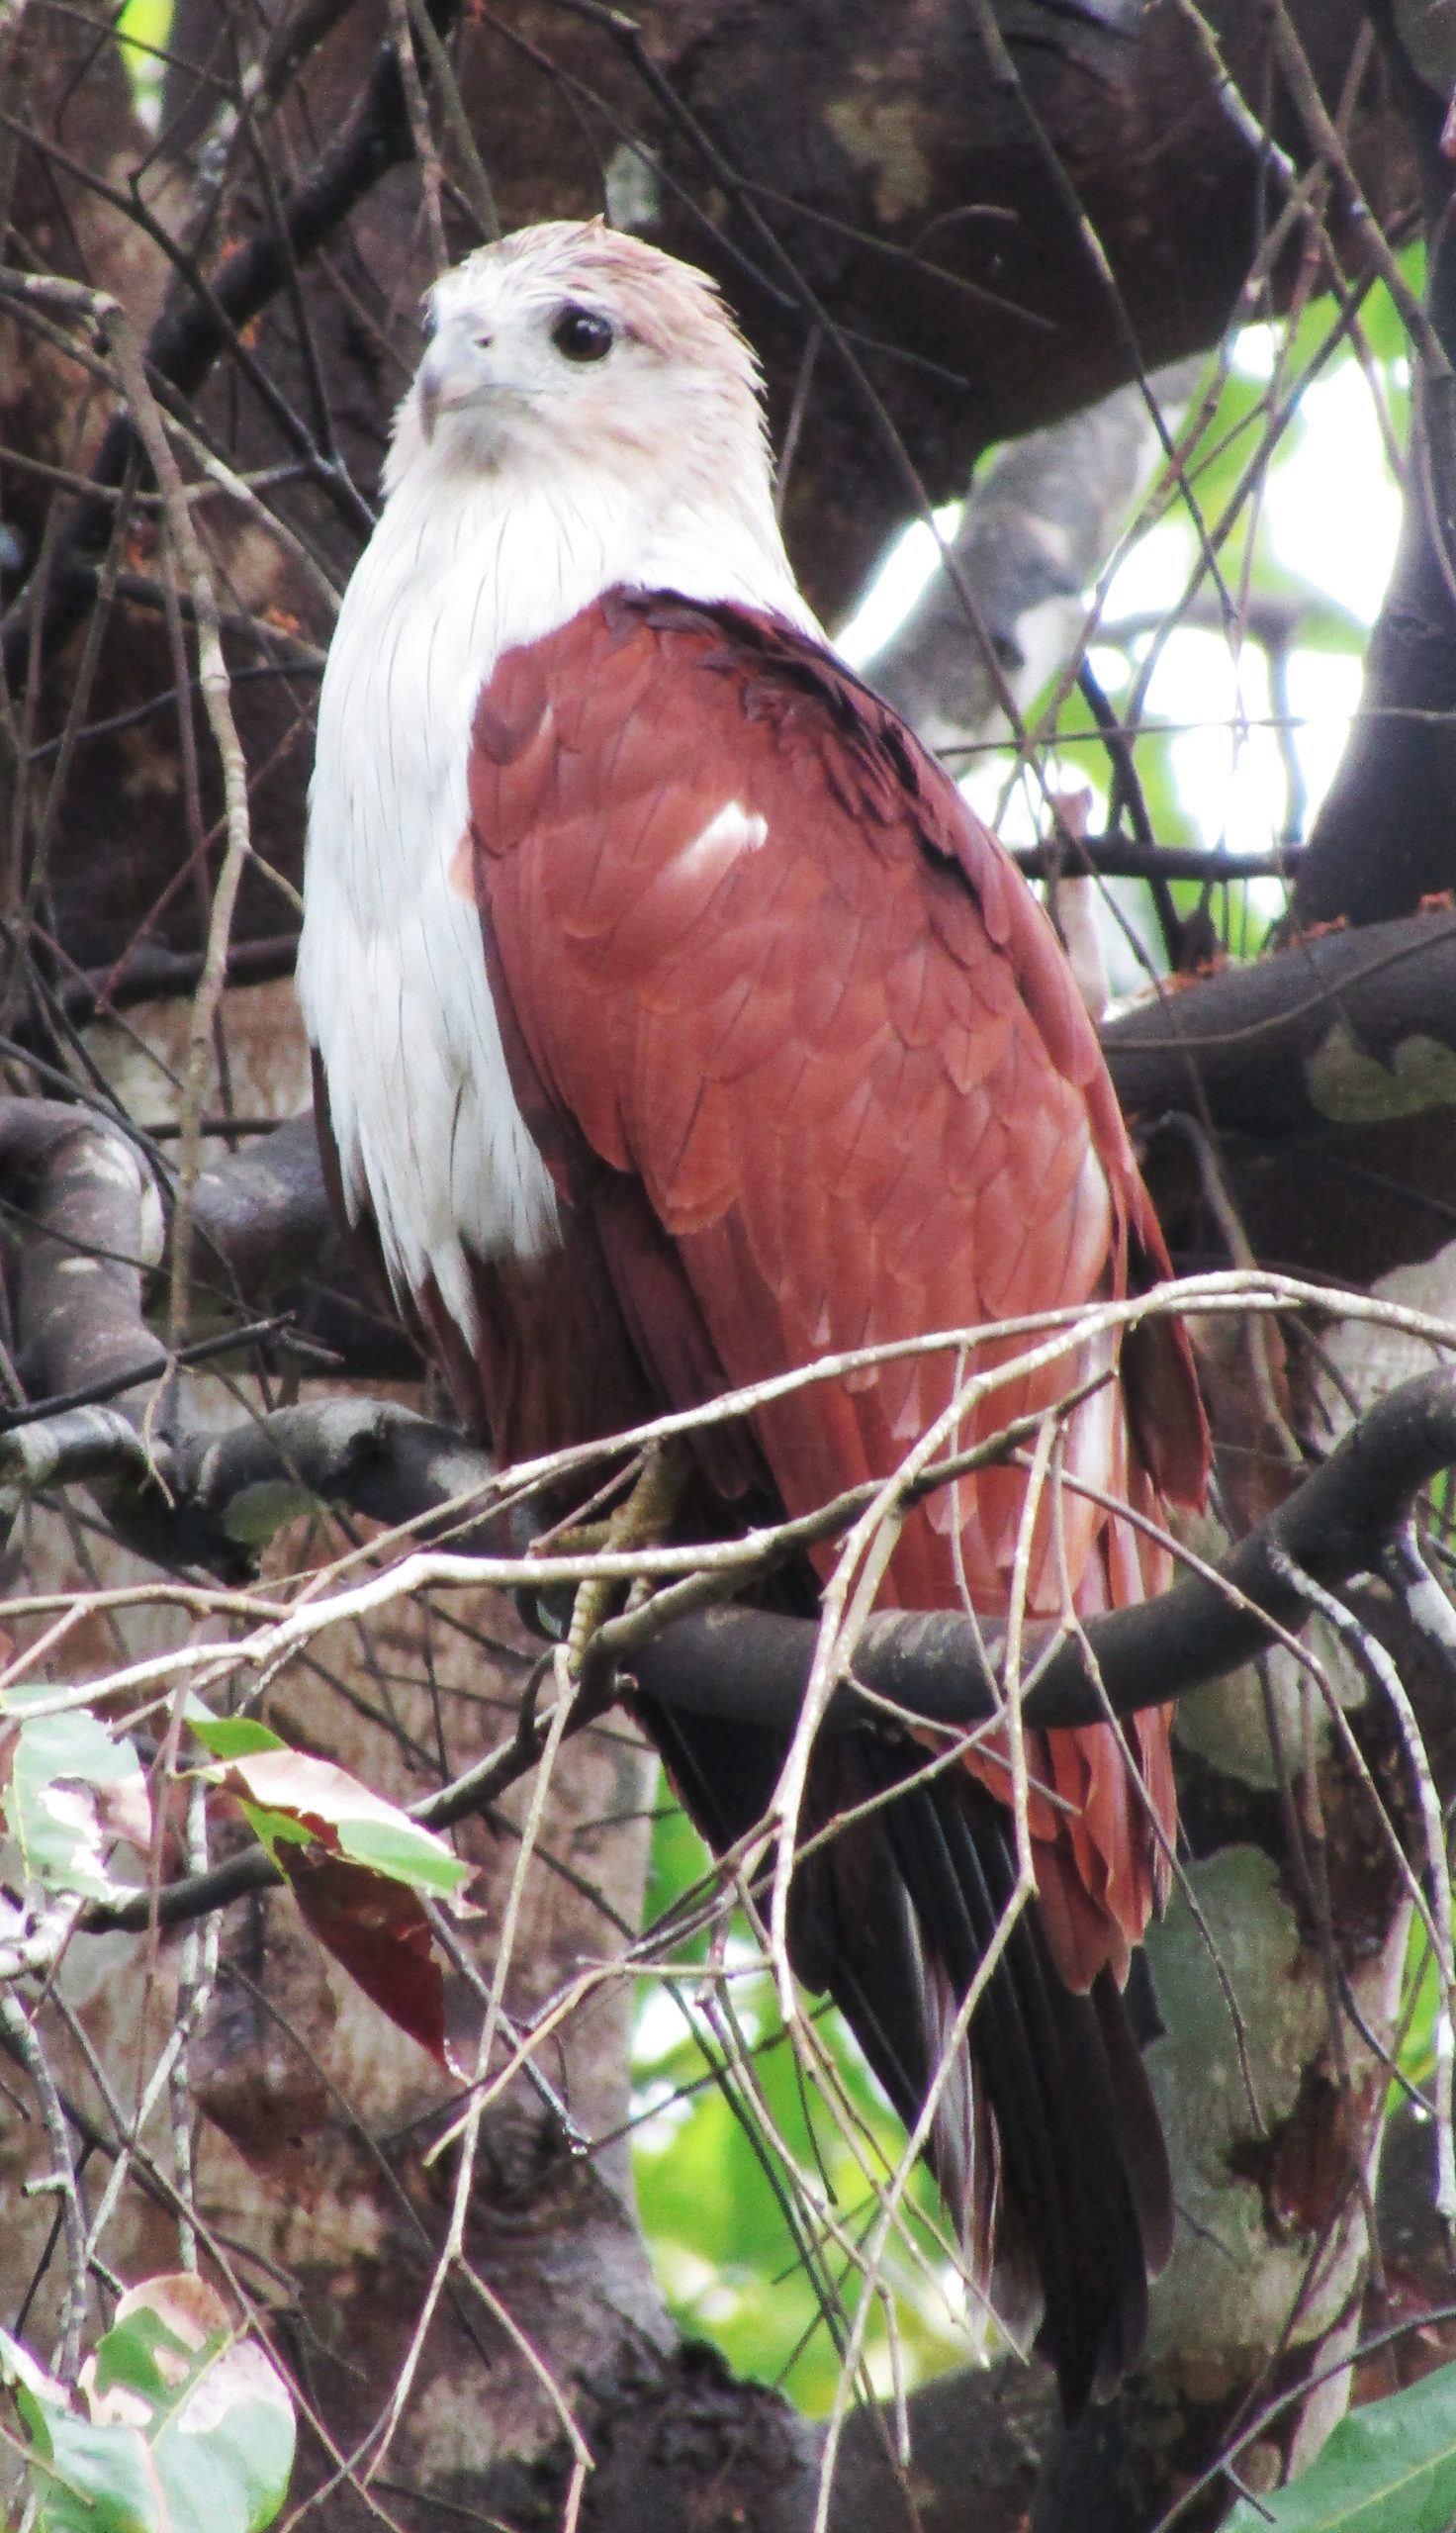 An eagle bird on a twig